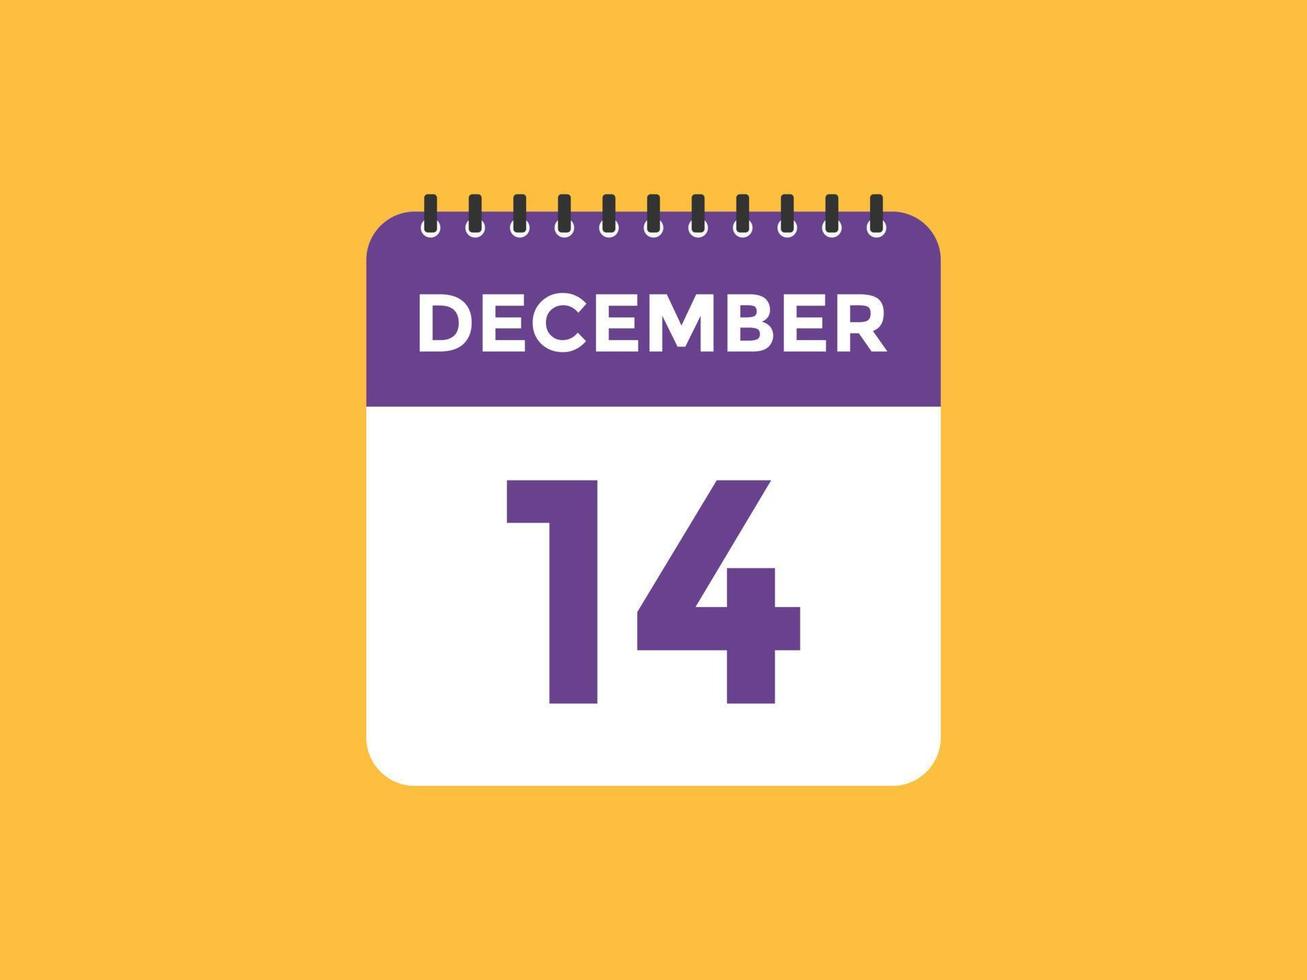 december 14 calendar reminder. 14th december daily calendar icon template. Calendar 14th december icon Design template. Vector illustration